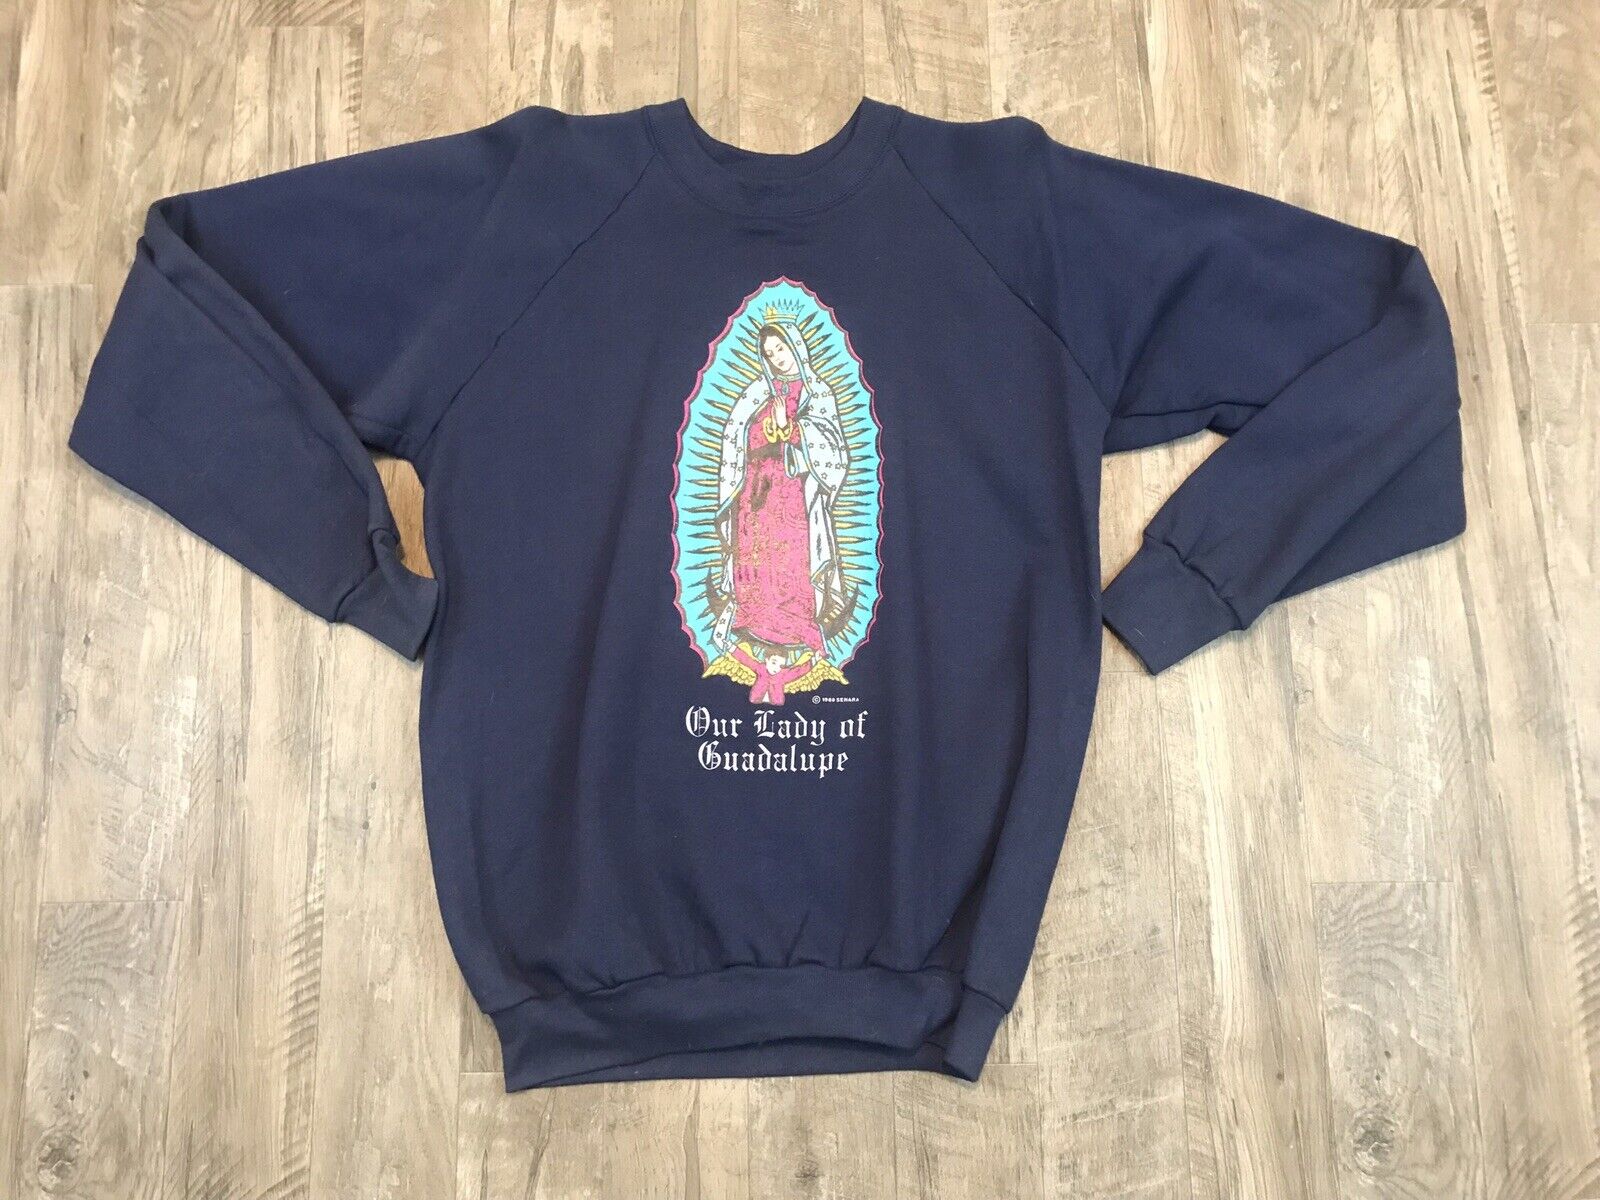 Vintage 1989 Our lady of quadalupe sweatshirt XL Rare Blue Vintage Sweatshirt